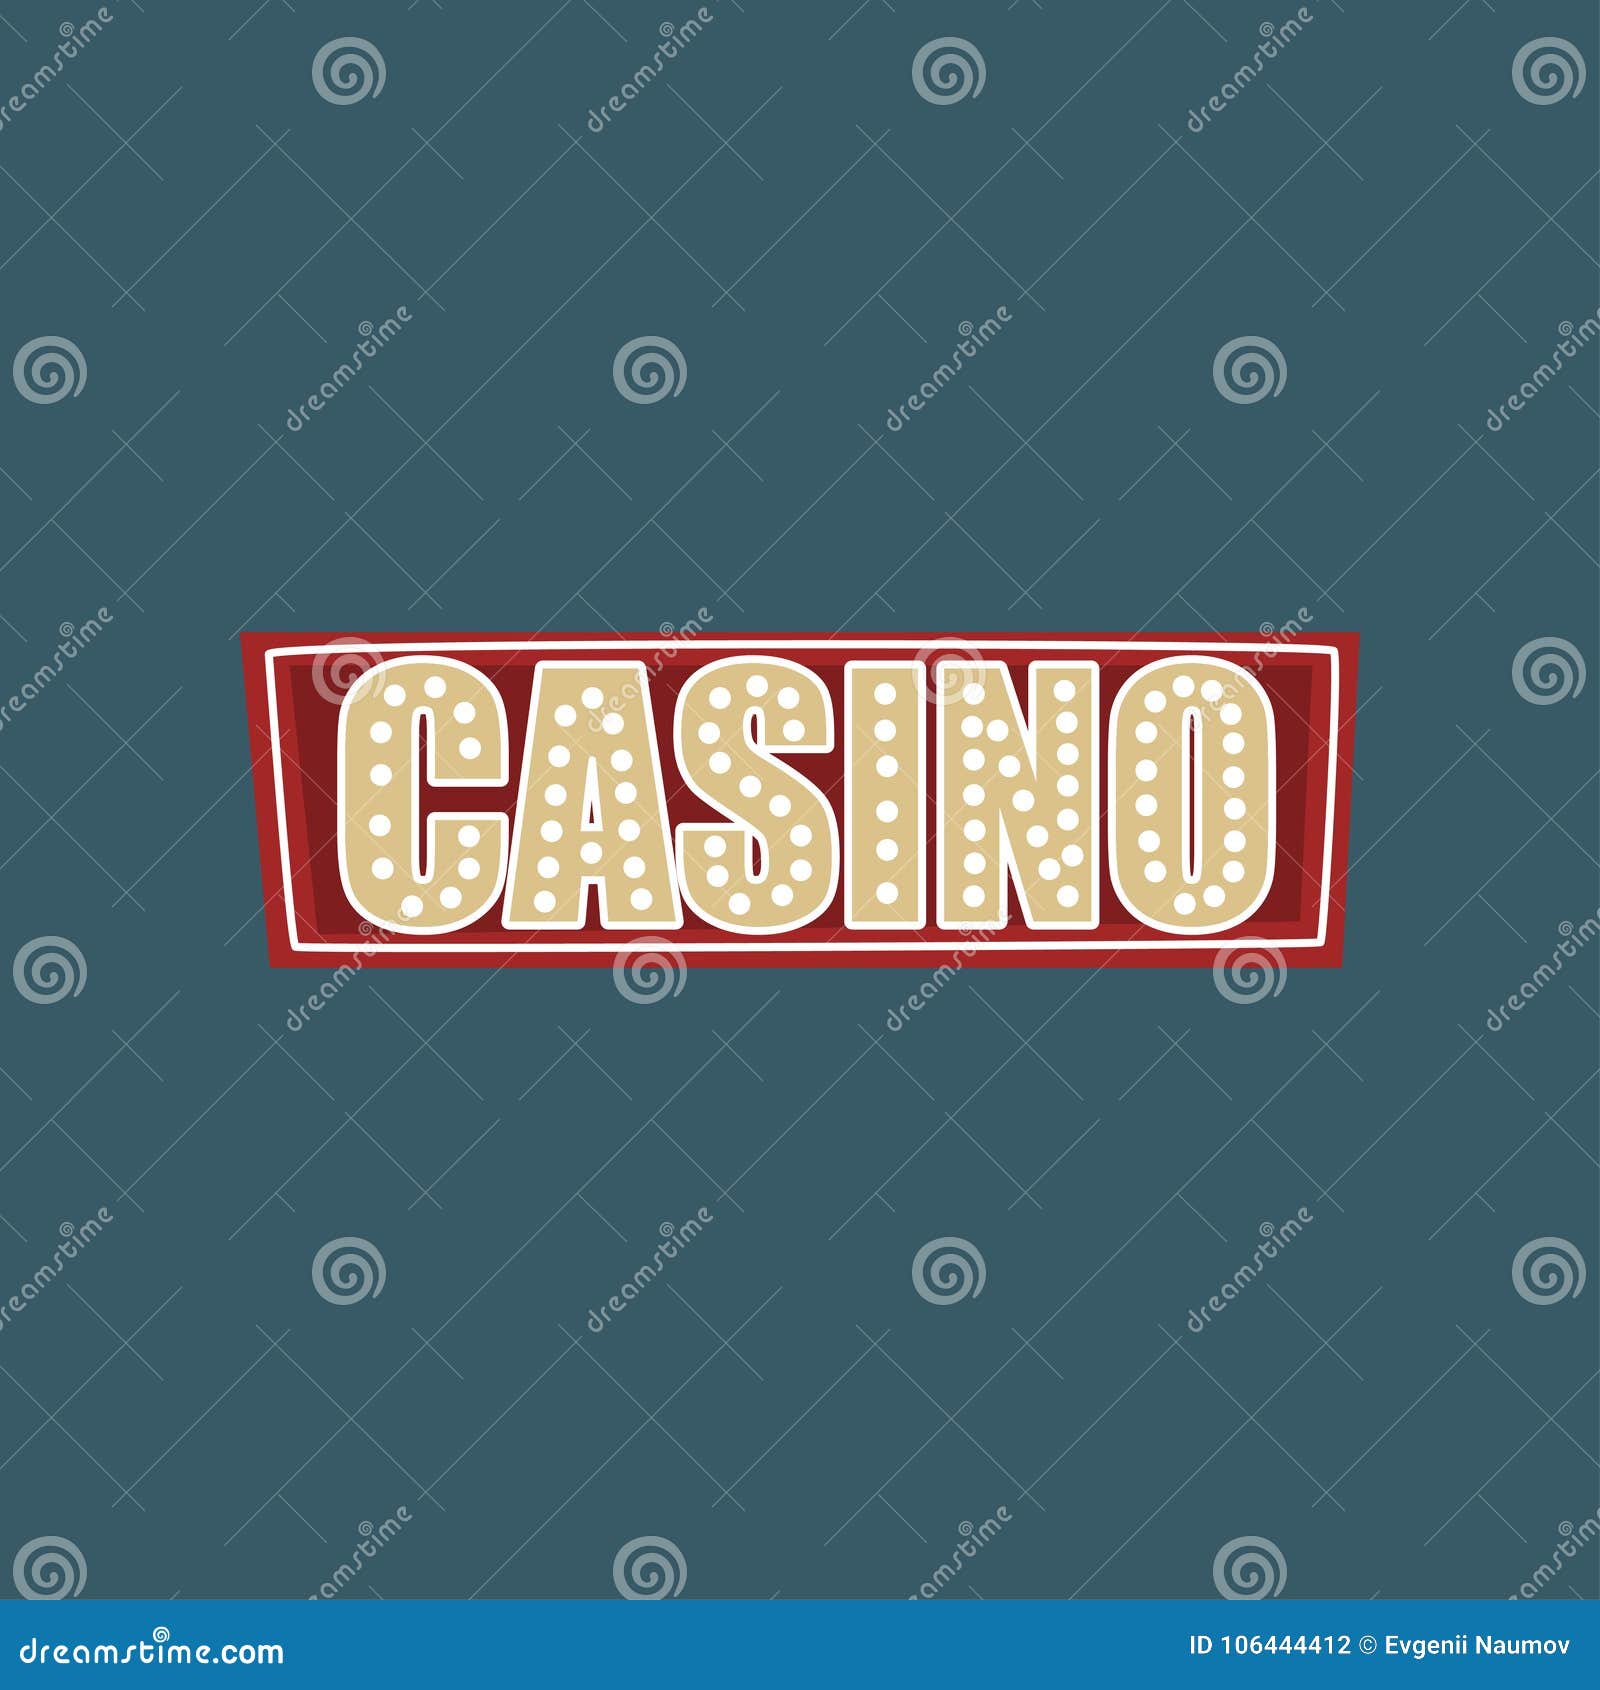 New retro casino промокоды на андроид